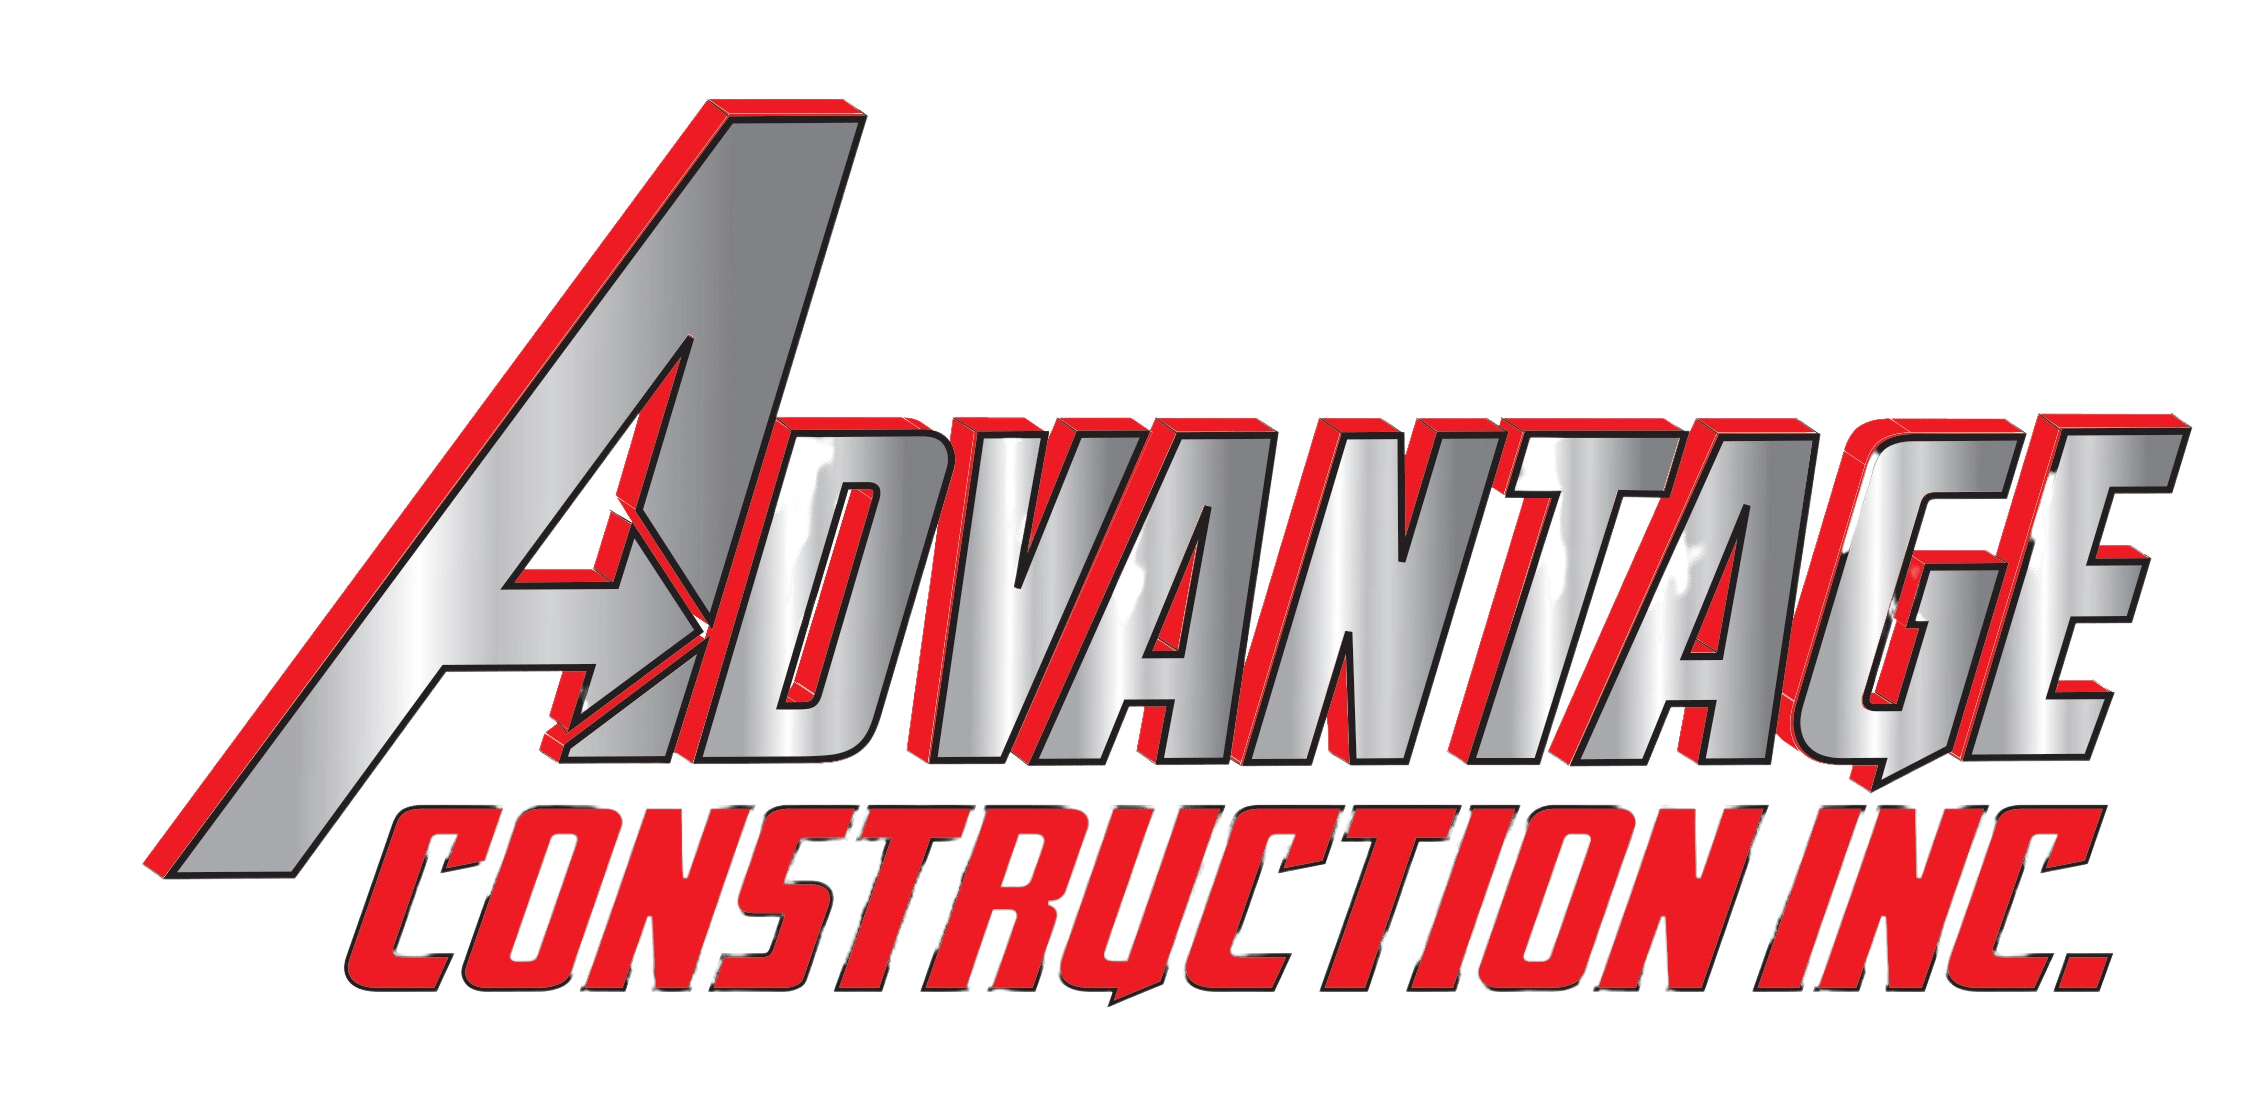 Advantage Construction, Inc. Logo